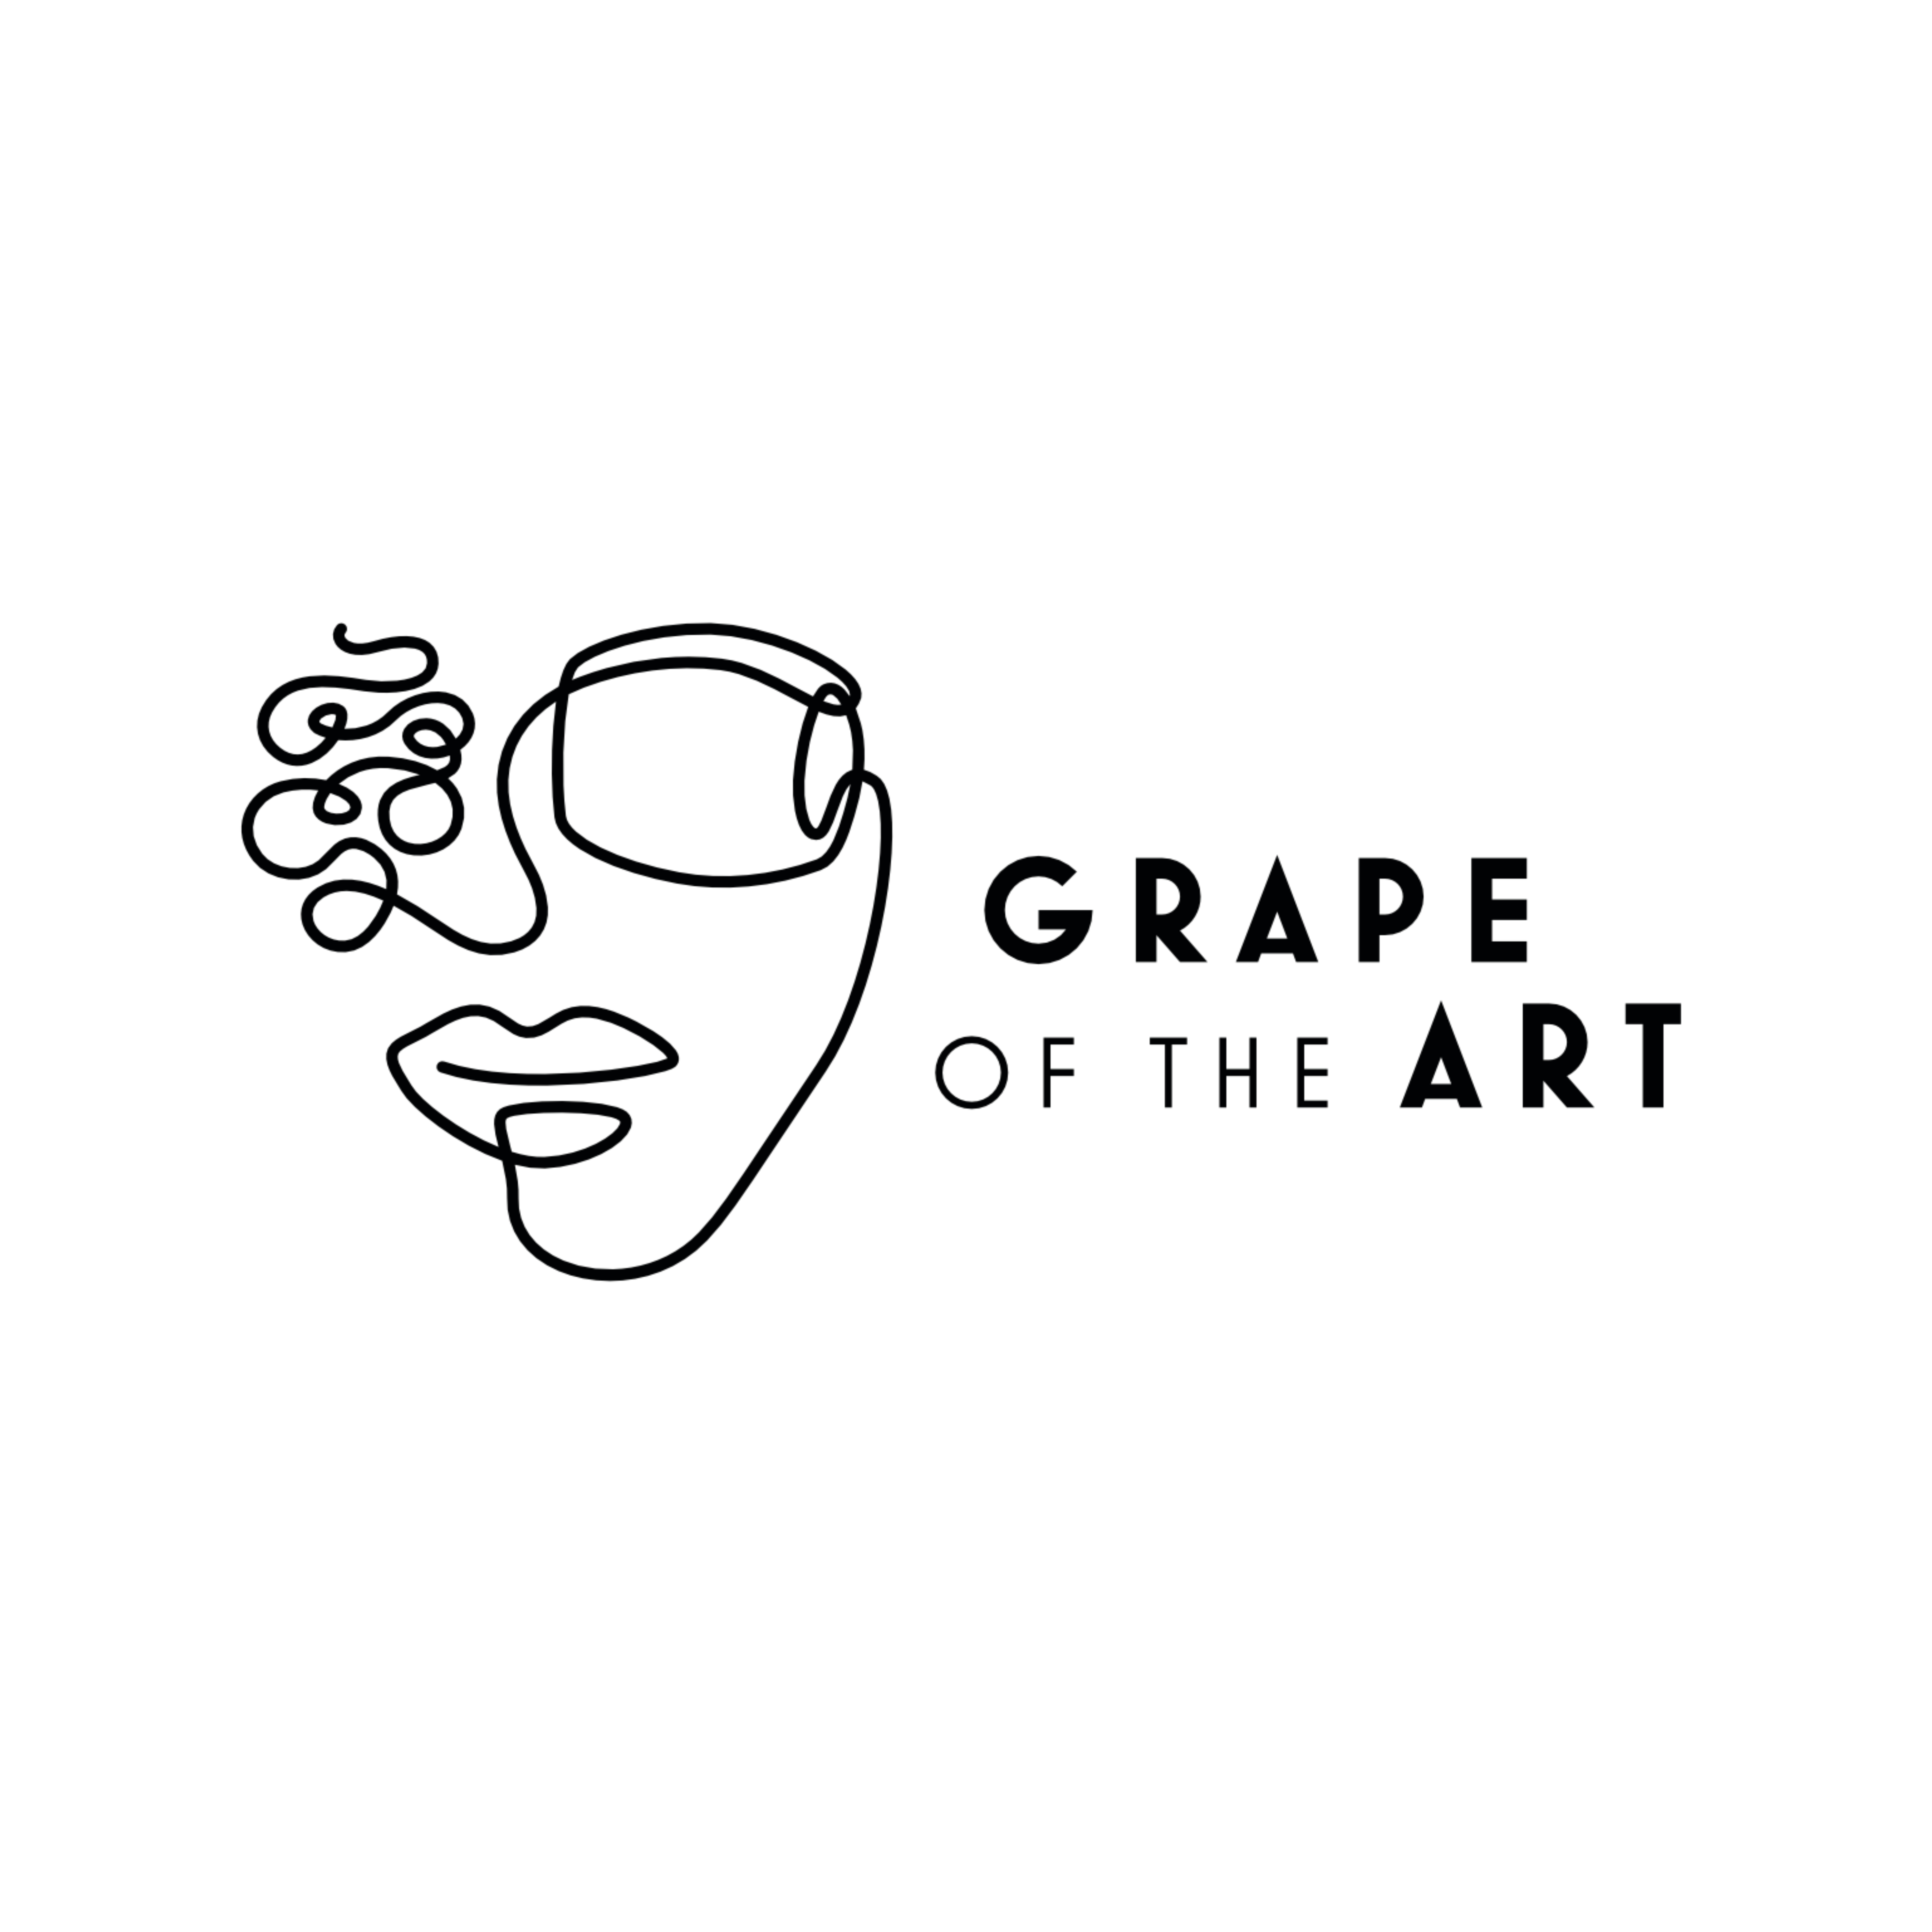 Grape of the Art